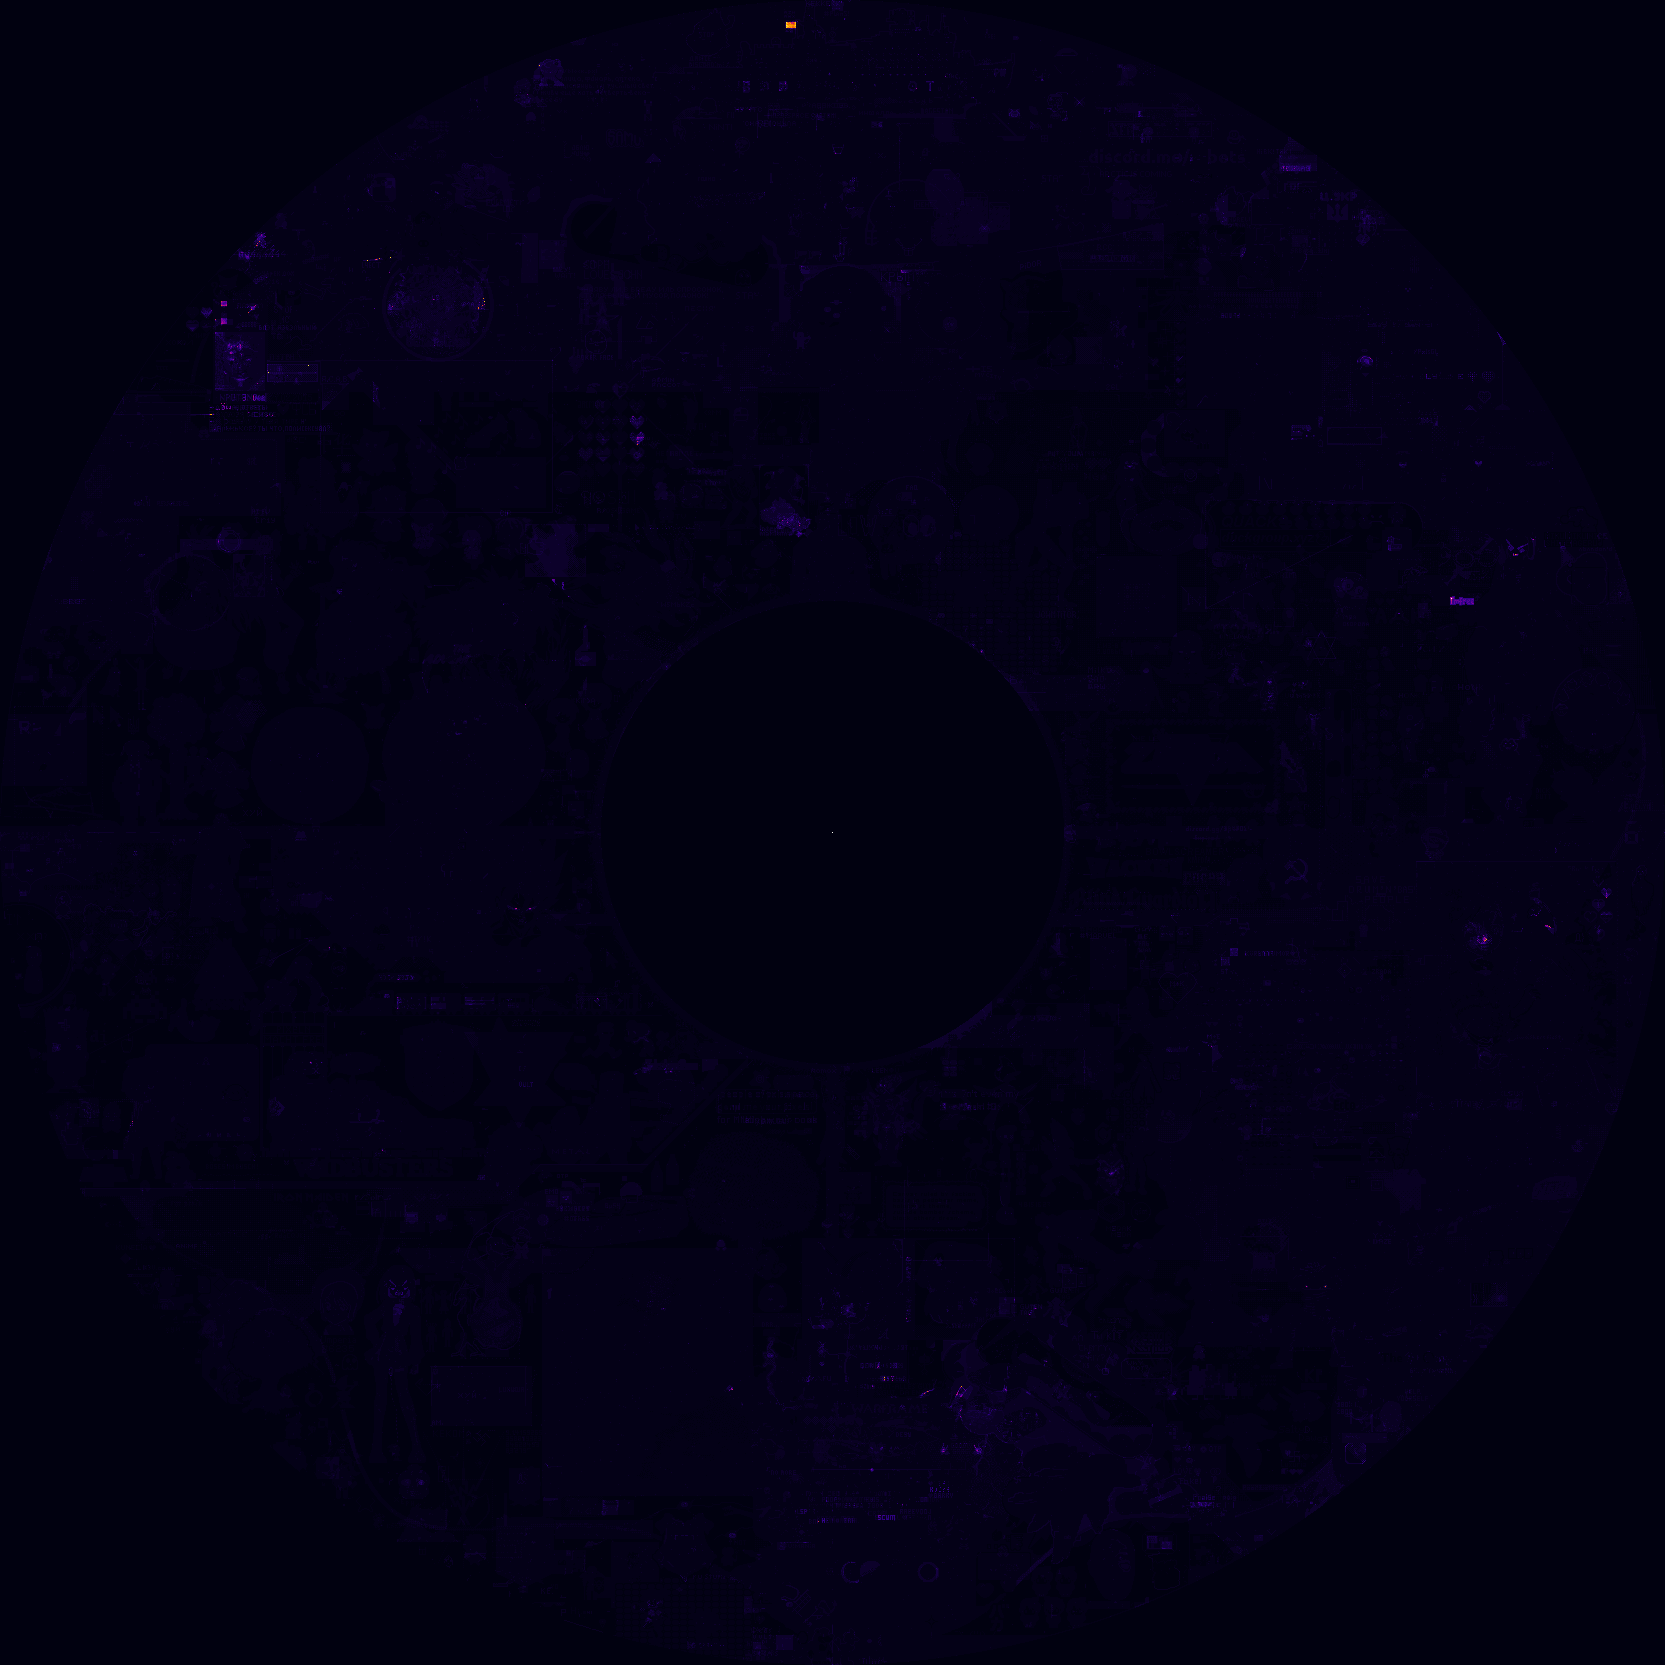 Canvas 4 - pixel heat map w/o center pixel